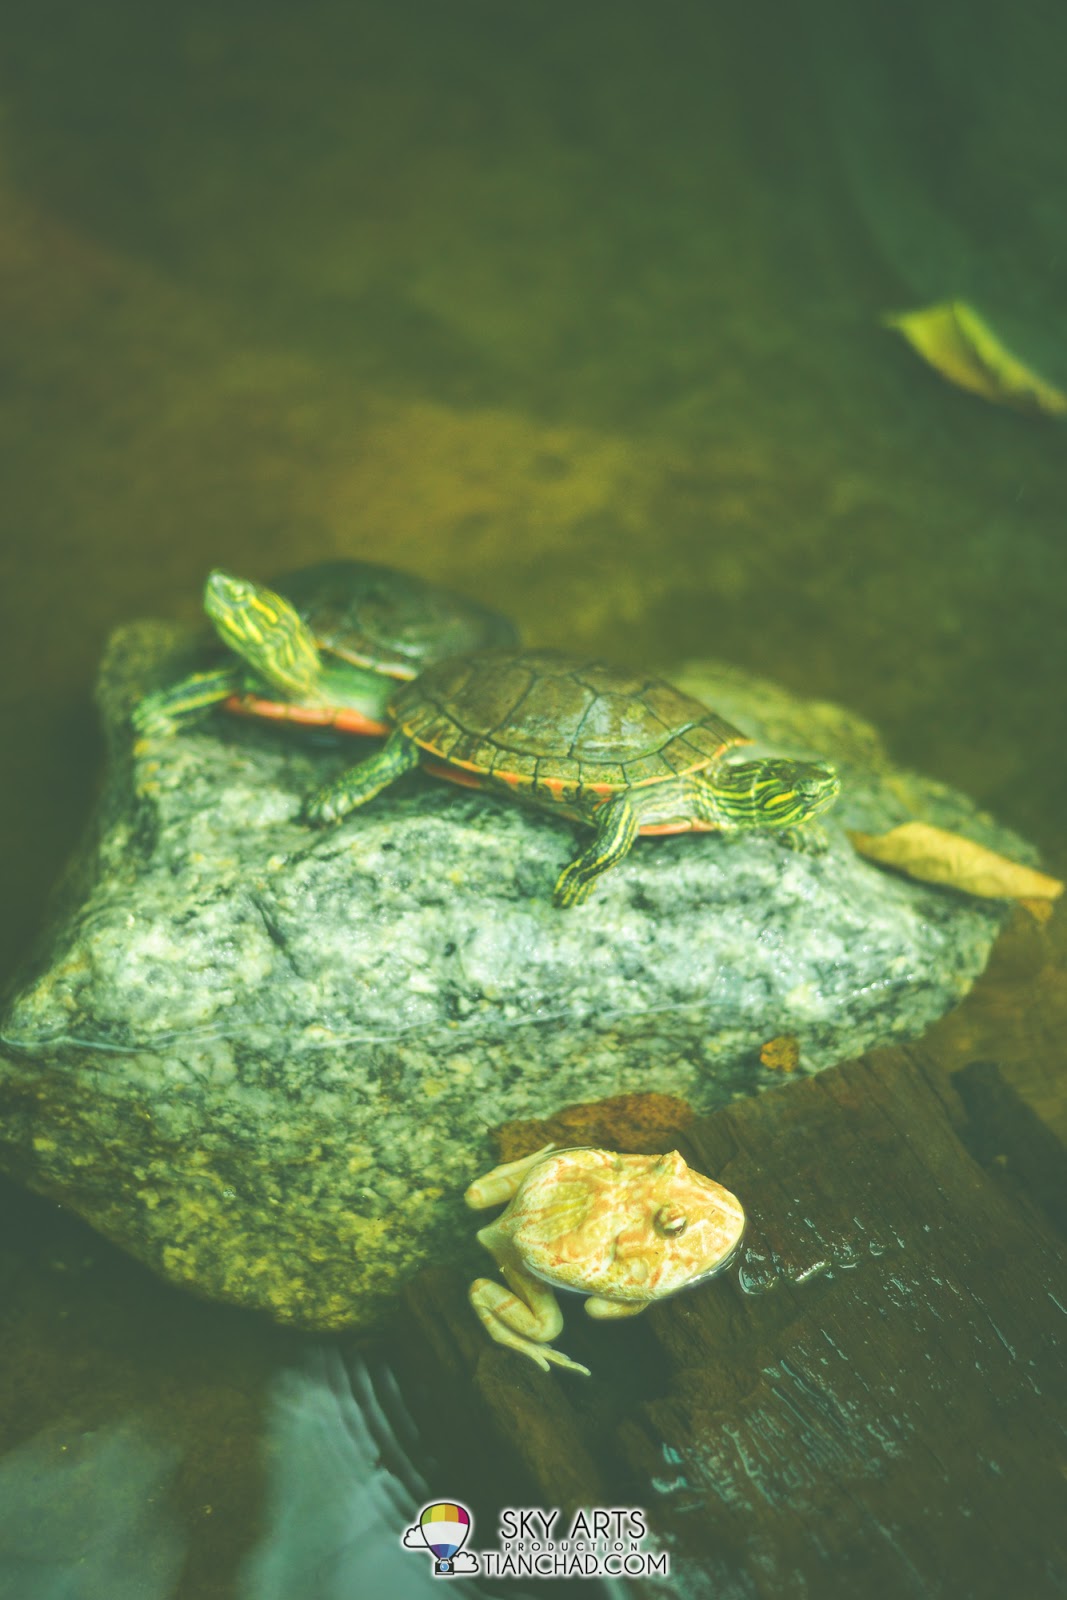 Little tortoise and yellow frog